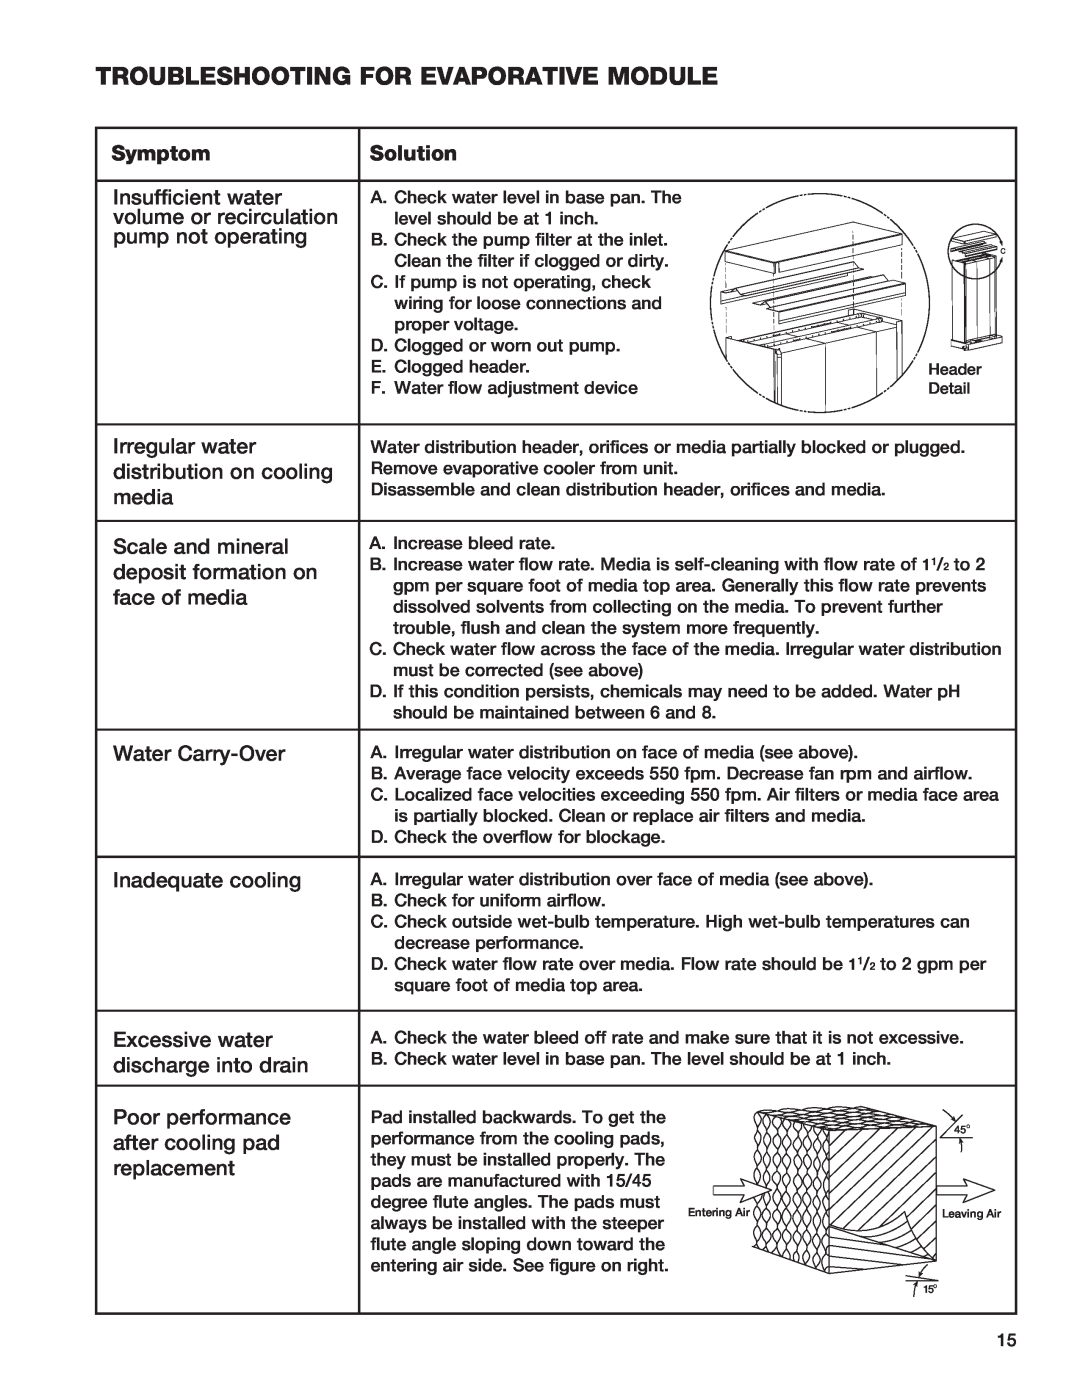 Greenheck Fan 45, HRE-20, 90, 55 manual Troubleshooting for evaporative module, Symptom, Solution 